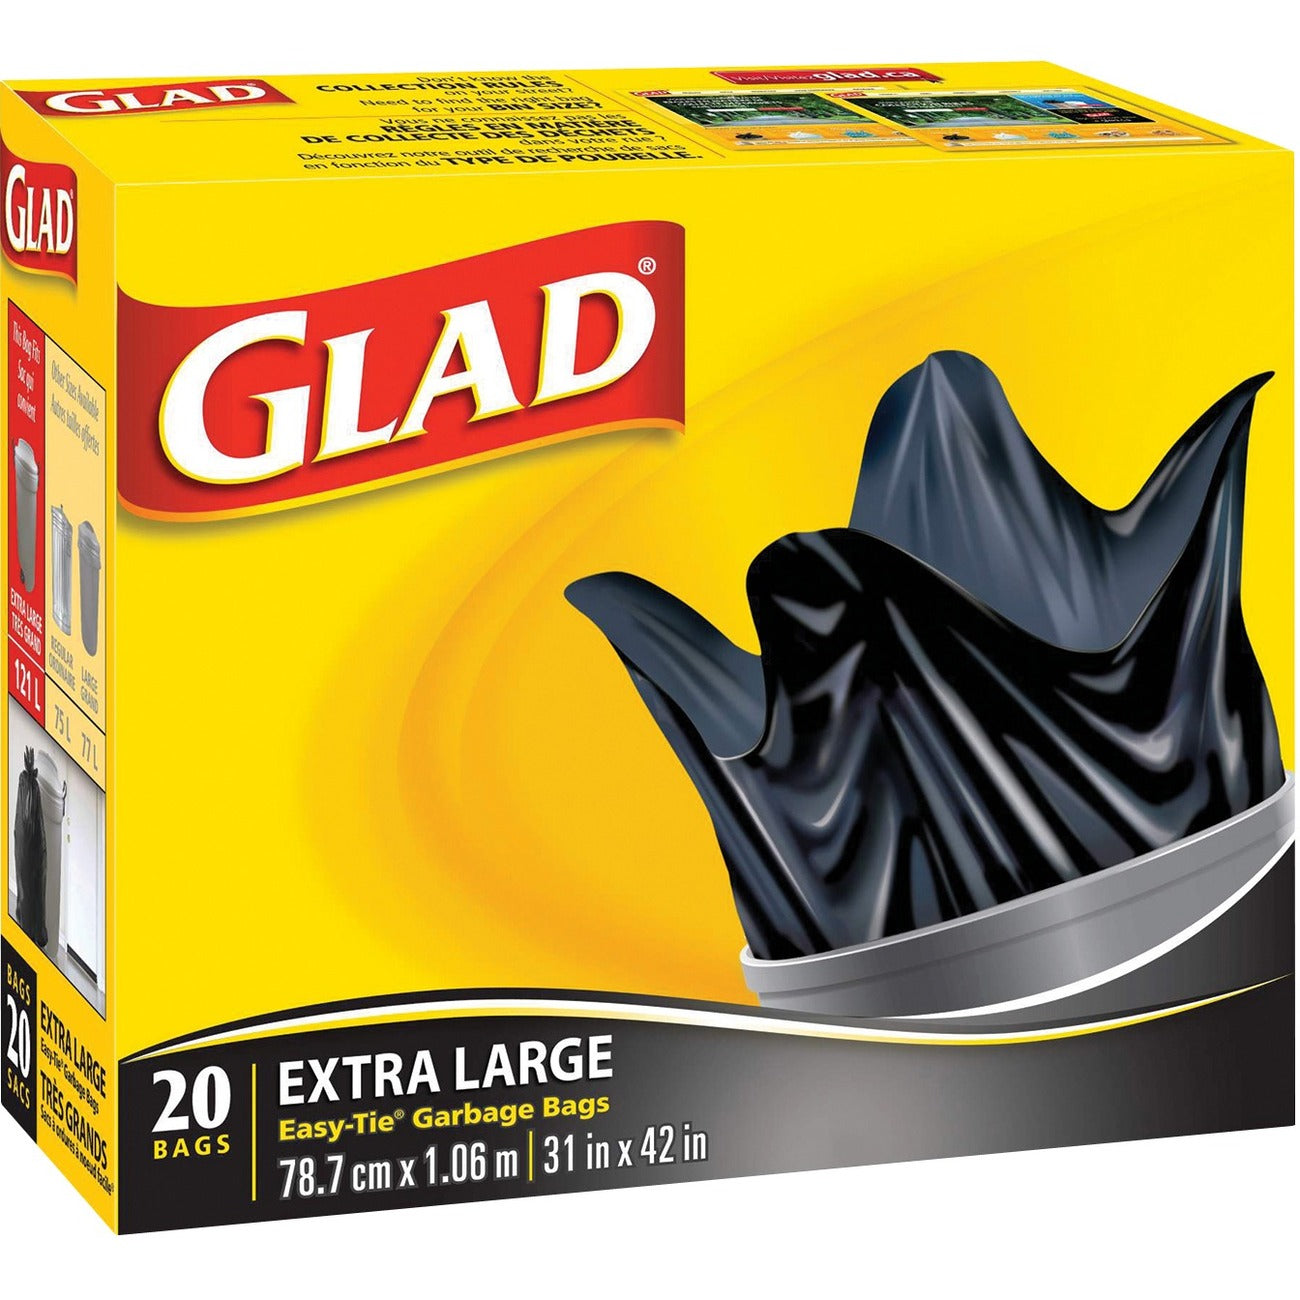 Glad Extra Large Easy Tie Garbage Bags